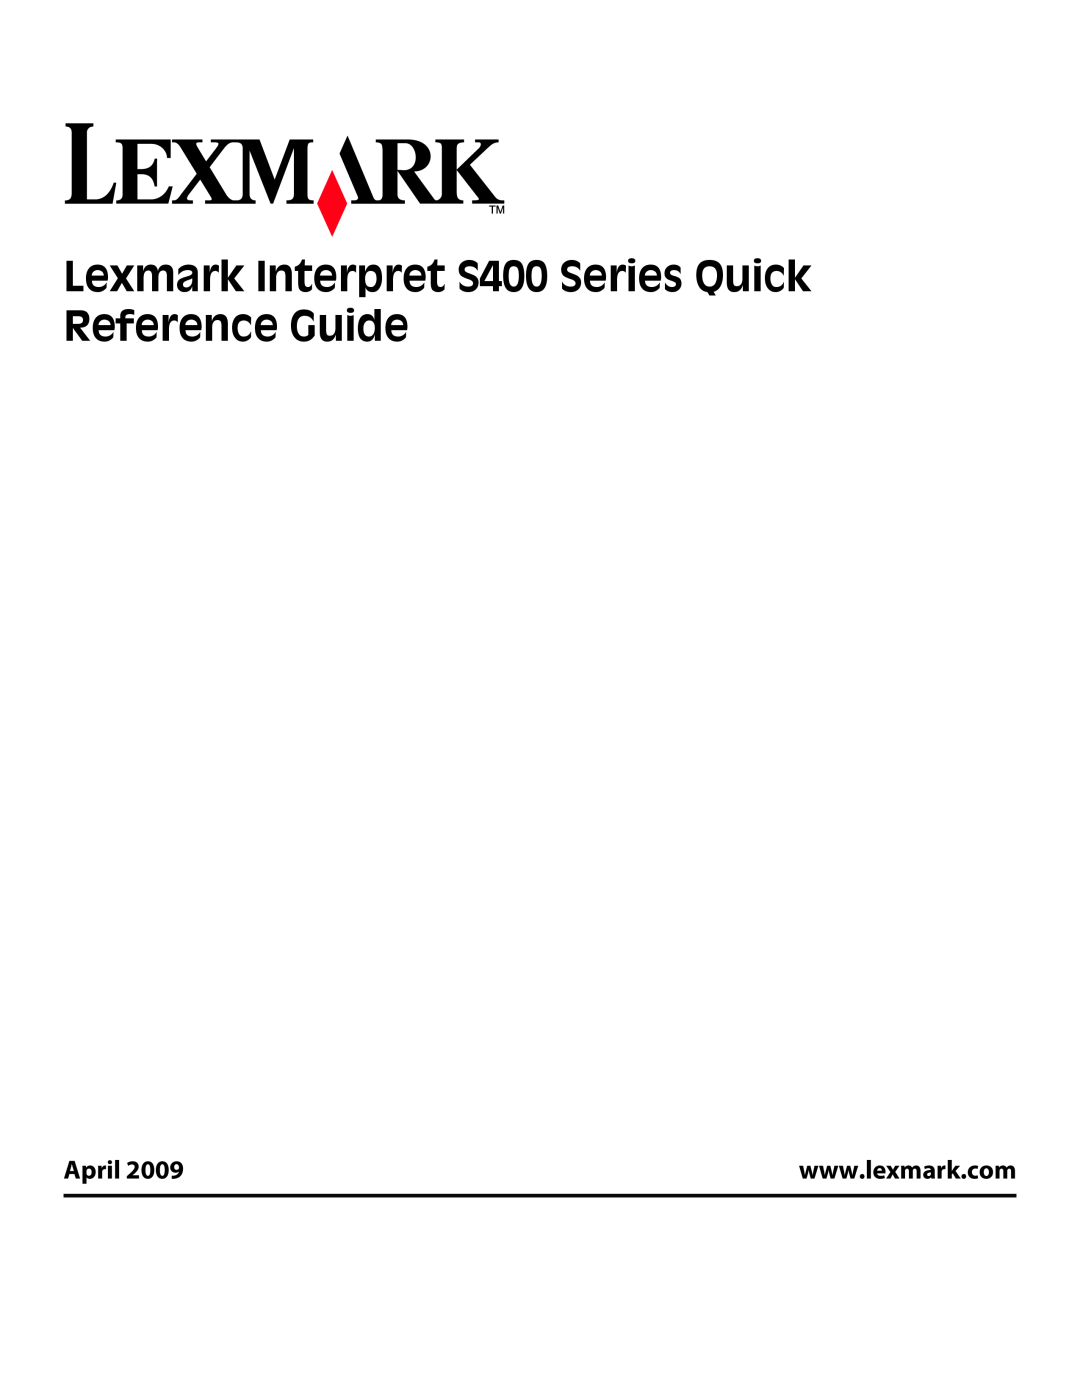 Lexmark manual Lexmark Interpret S400 Series Quick Reference Guide, April 